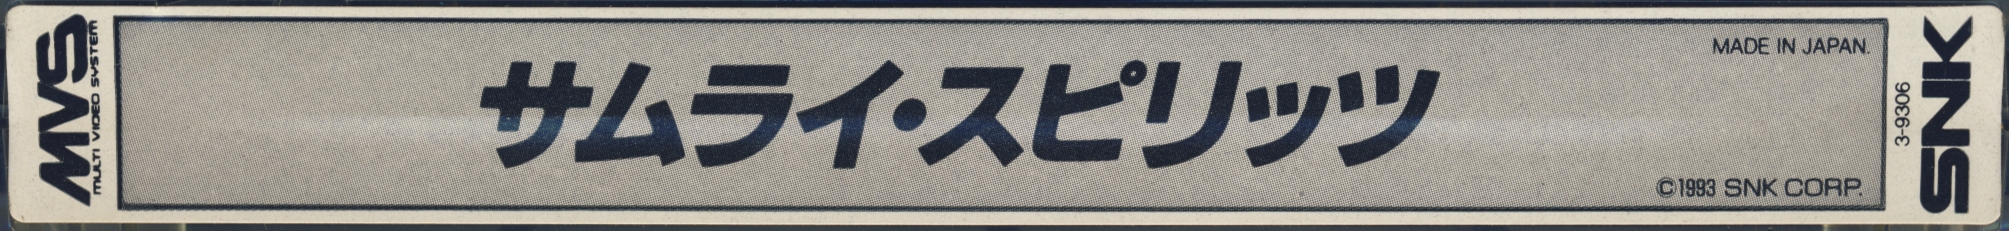 Samurai shodown jp label.jpg